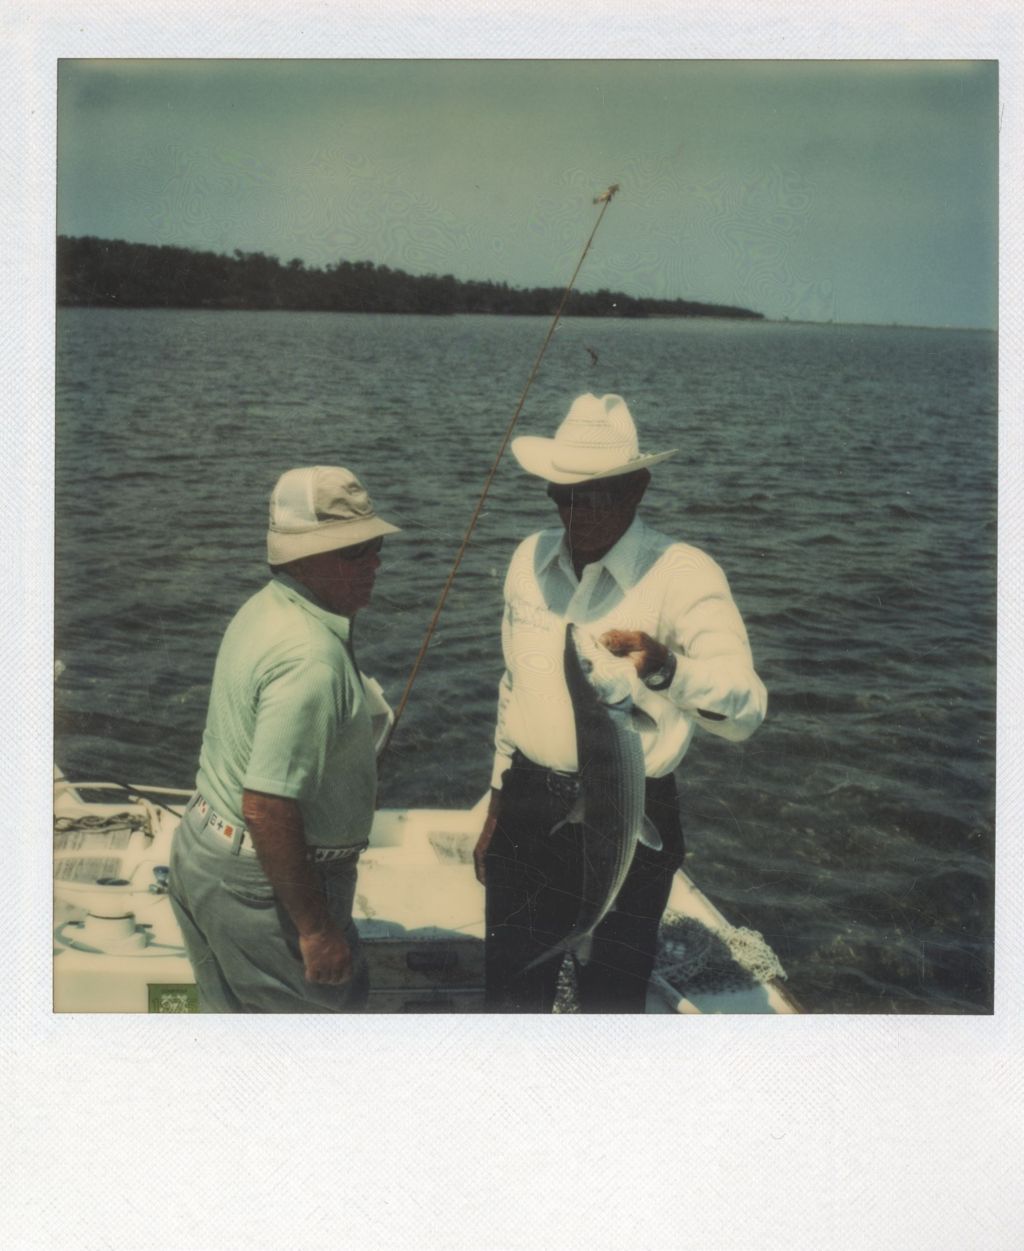 Miniature of Richard J. Daley and a man displaying a fish